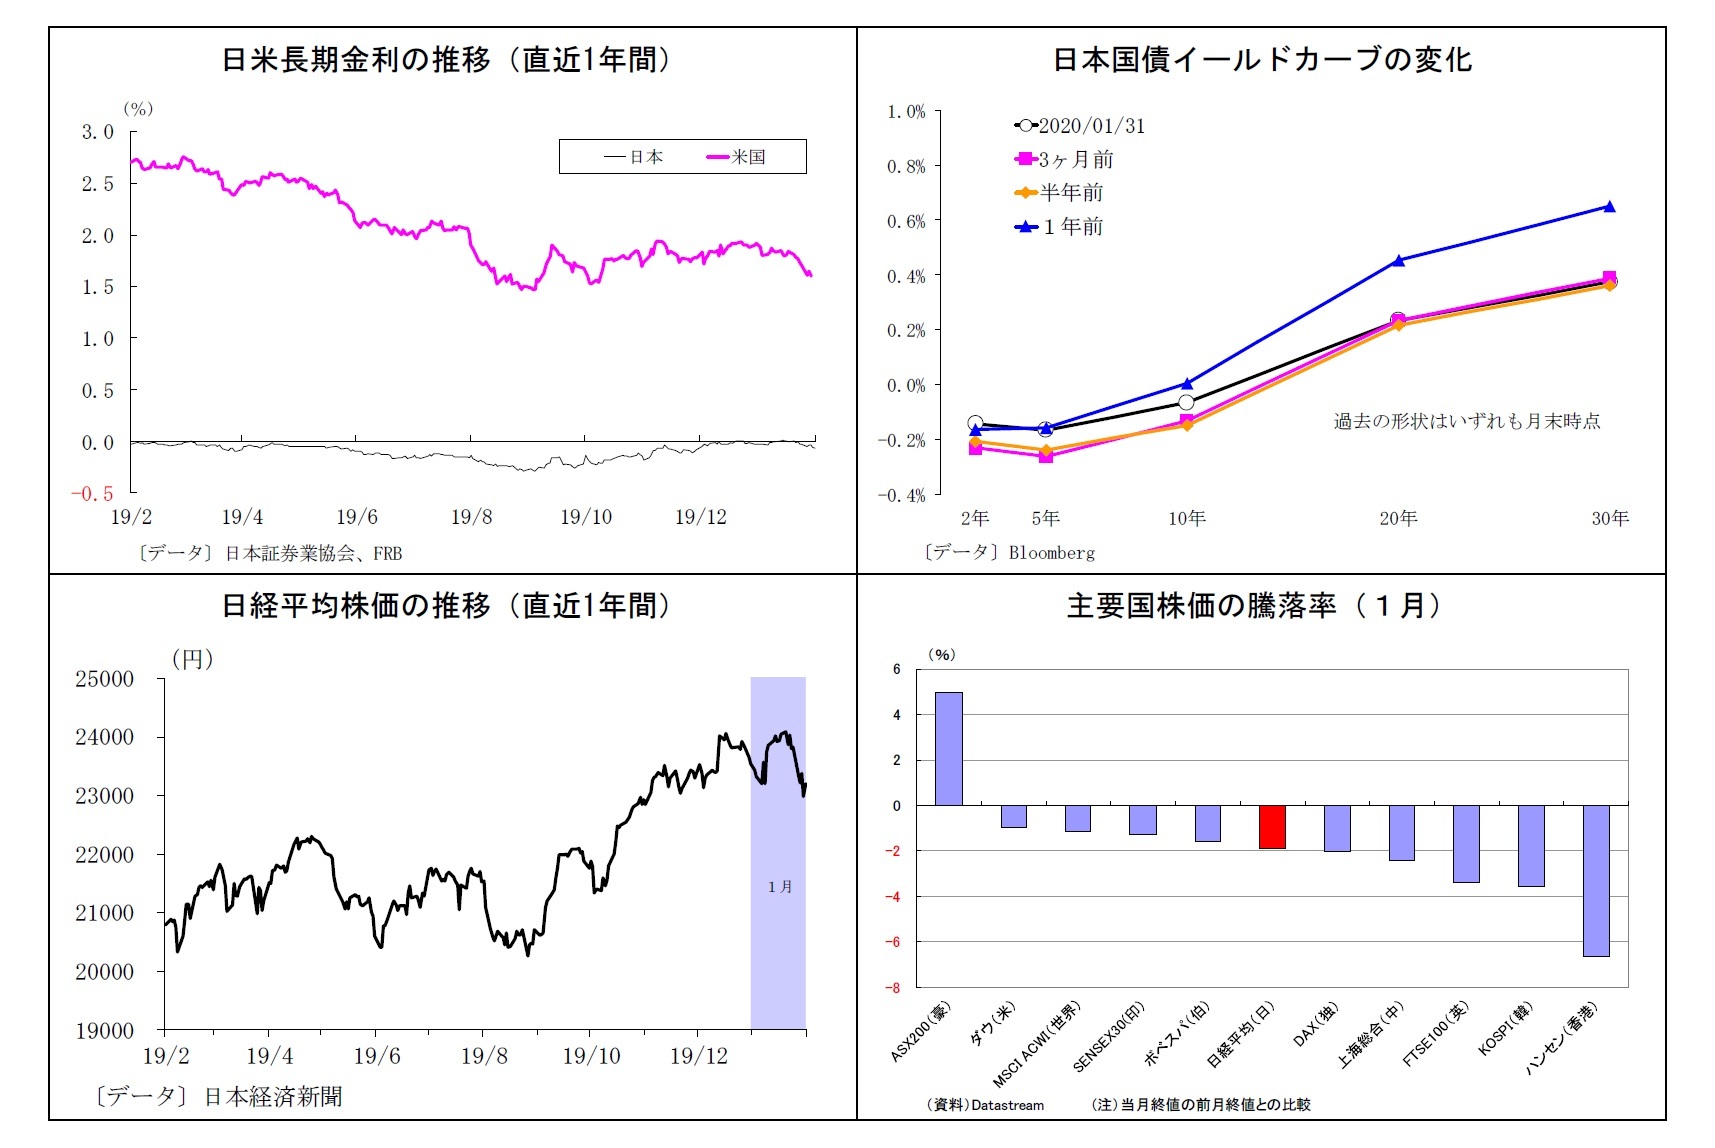 日米長期金利の推移（直近1年間）/日本国債イールドカーブの変化/日経平均株価の推移（直近1年間）/主要国株価の騰落率（１月）